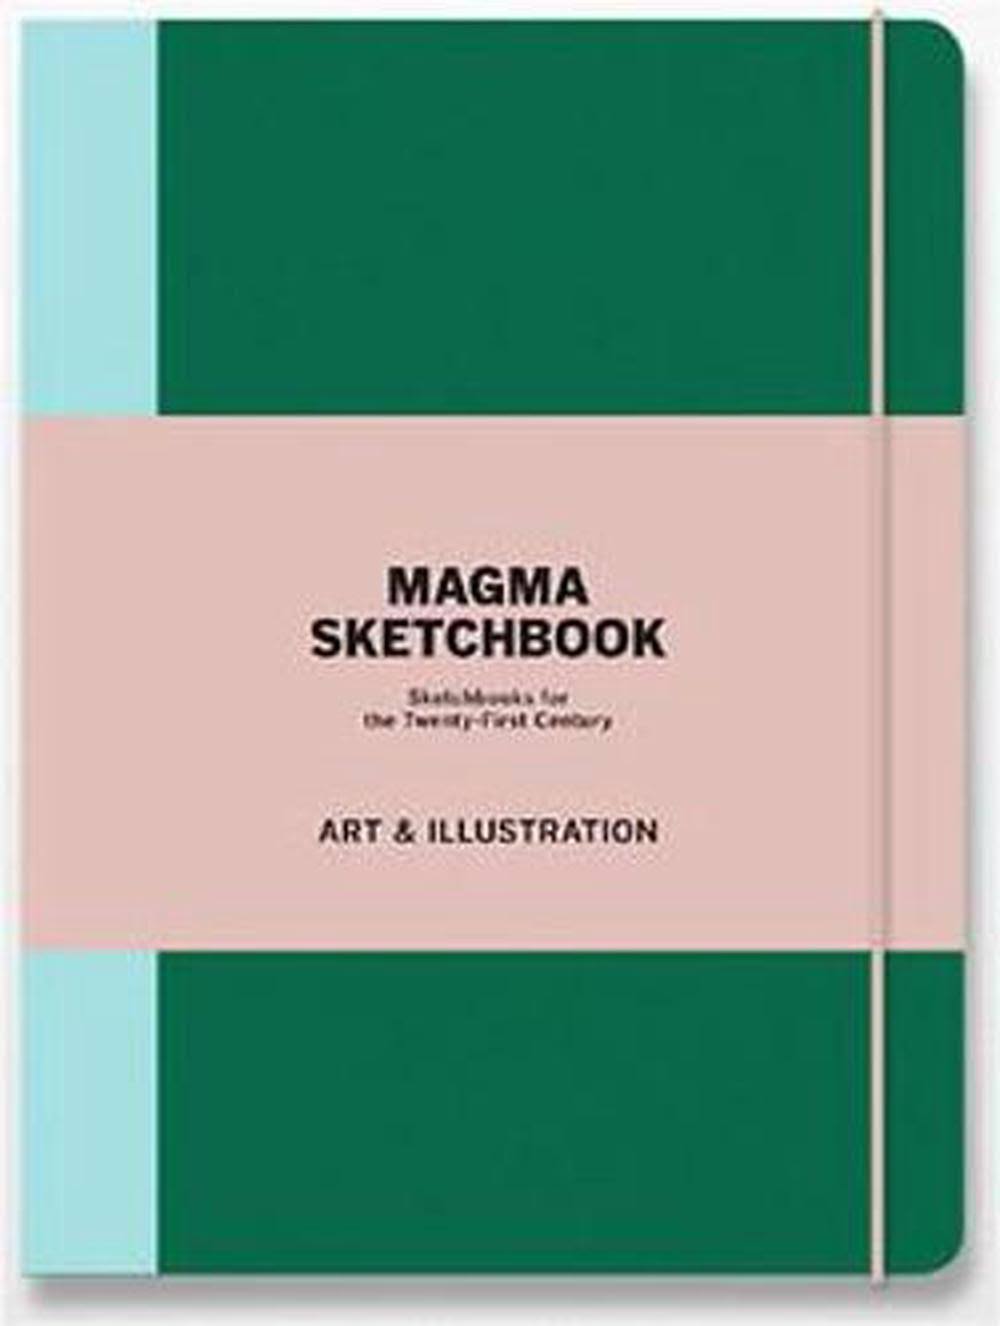 Magma Sketchbook: Art and Illustration - Magma Books Staff